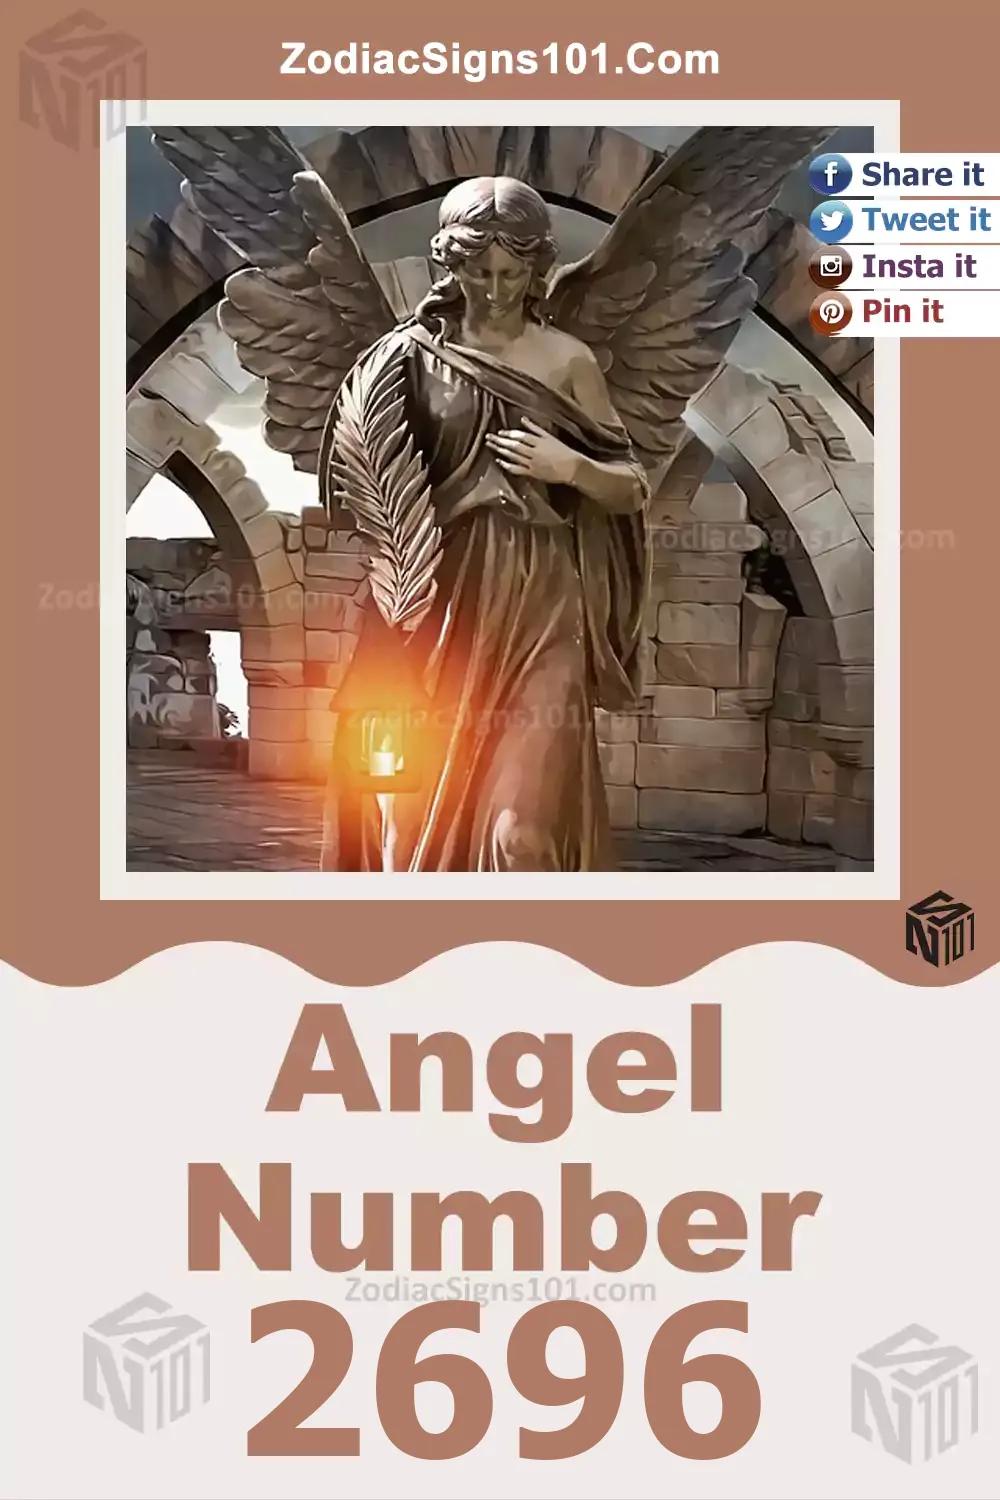 2696-Angel-Number-Meaning.jpg